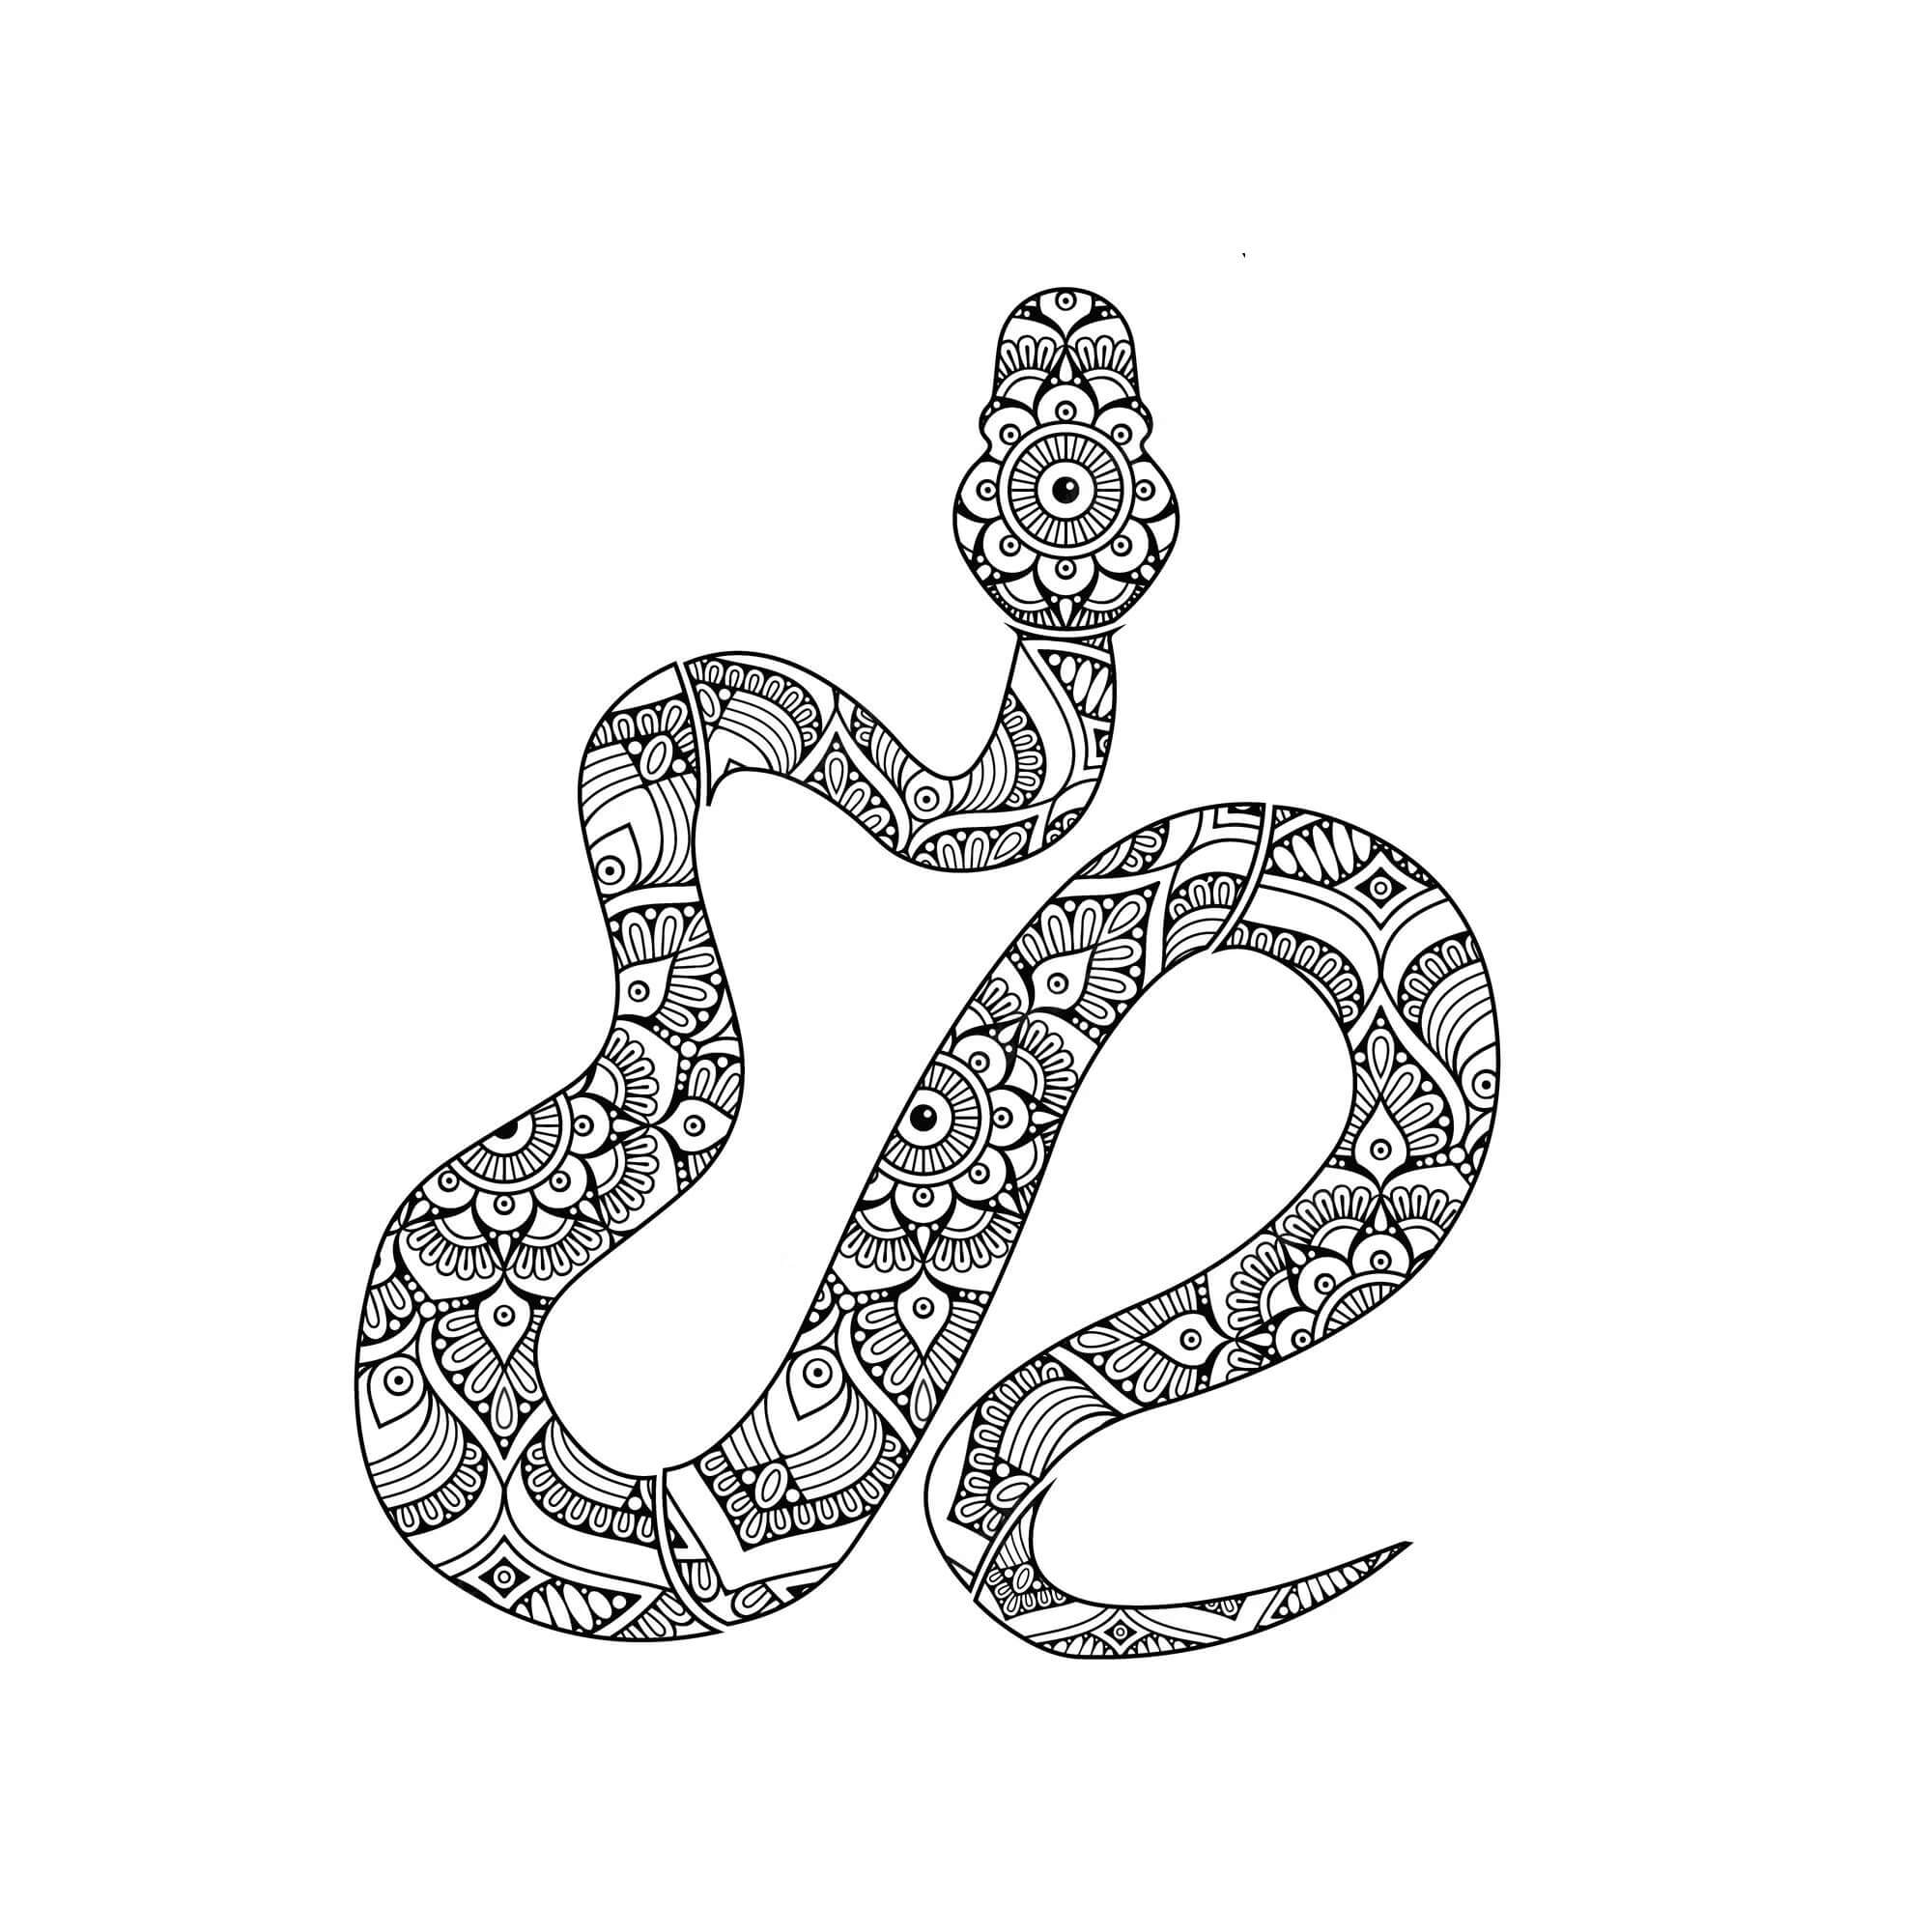 Mandala Snake Coloring Page - Sheet 3 Mandalas